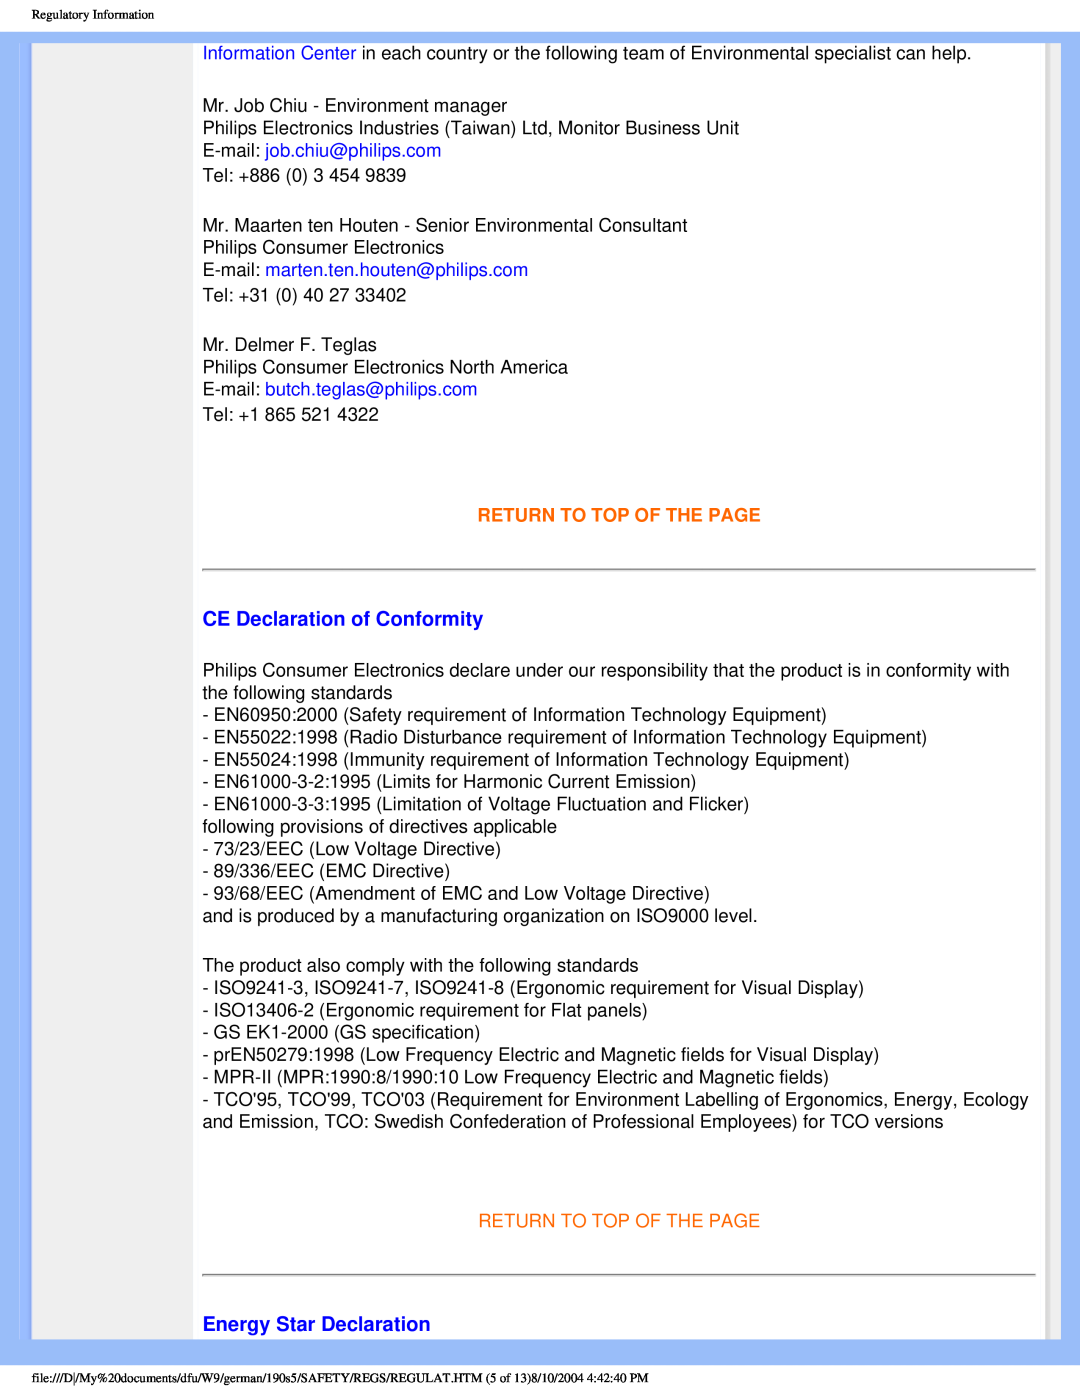 Philips 190S5 user manual CE Declaration of Conformity, Energy Star Declaration, E-mail: job.chiu@philips.com 